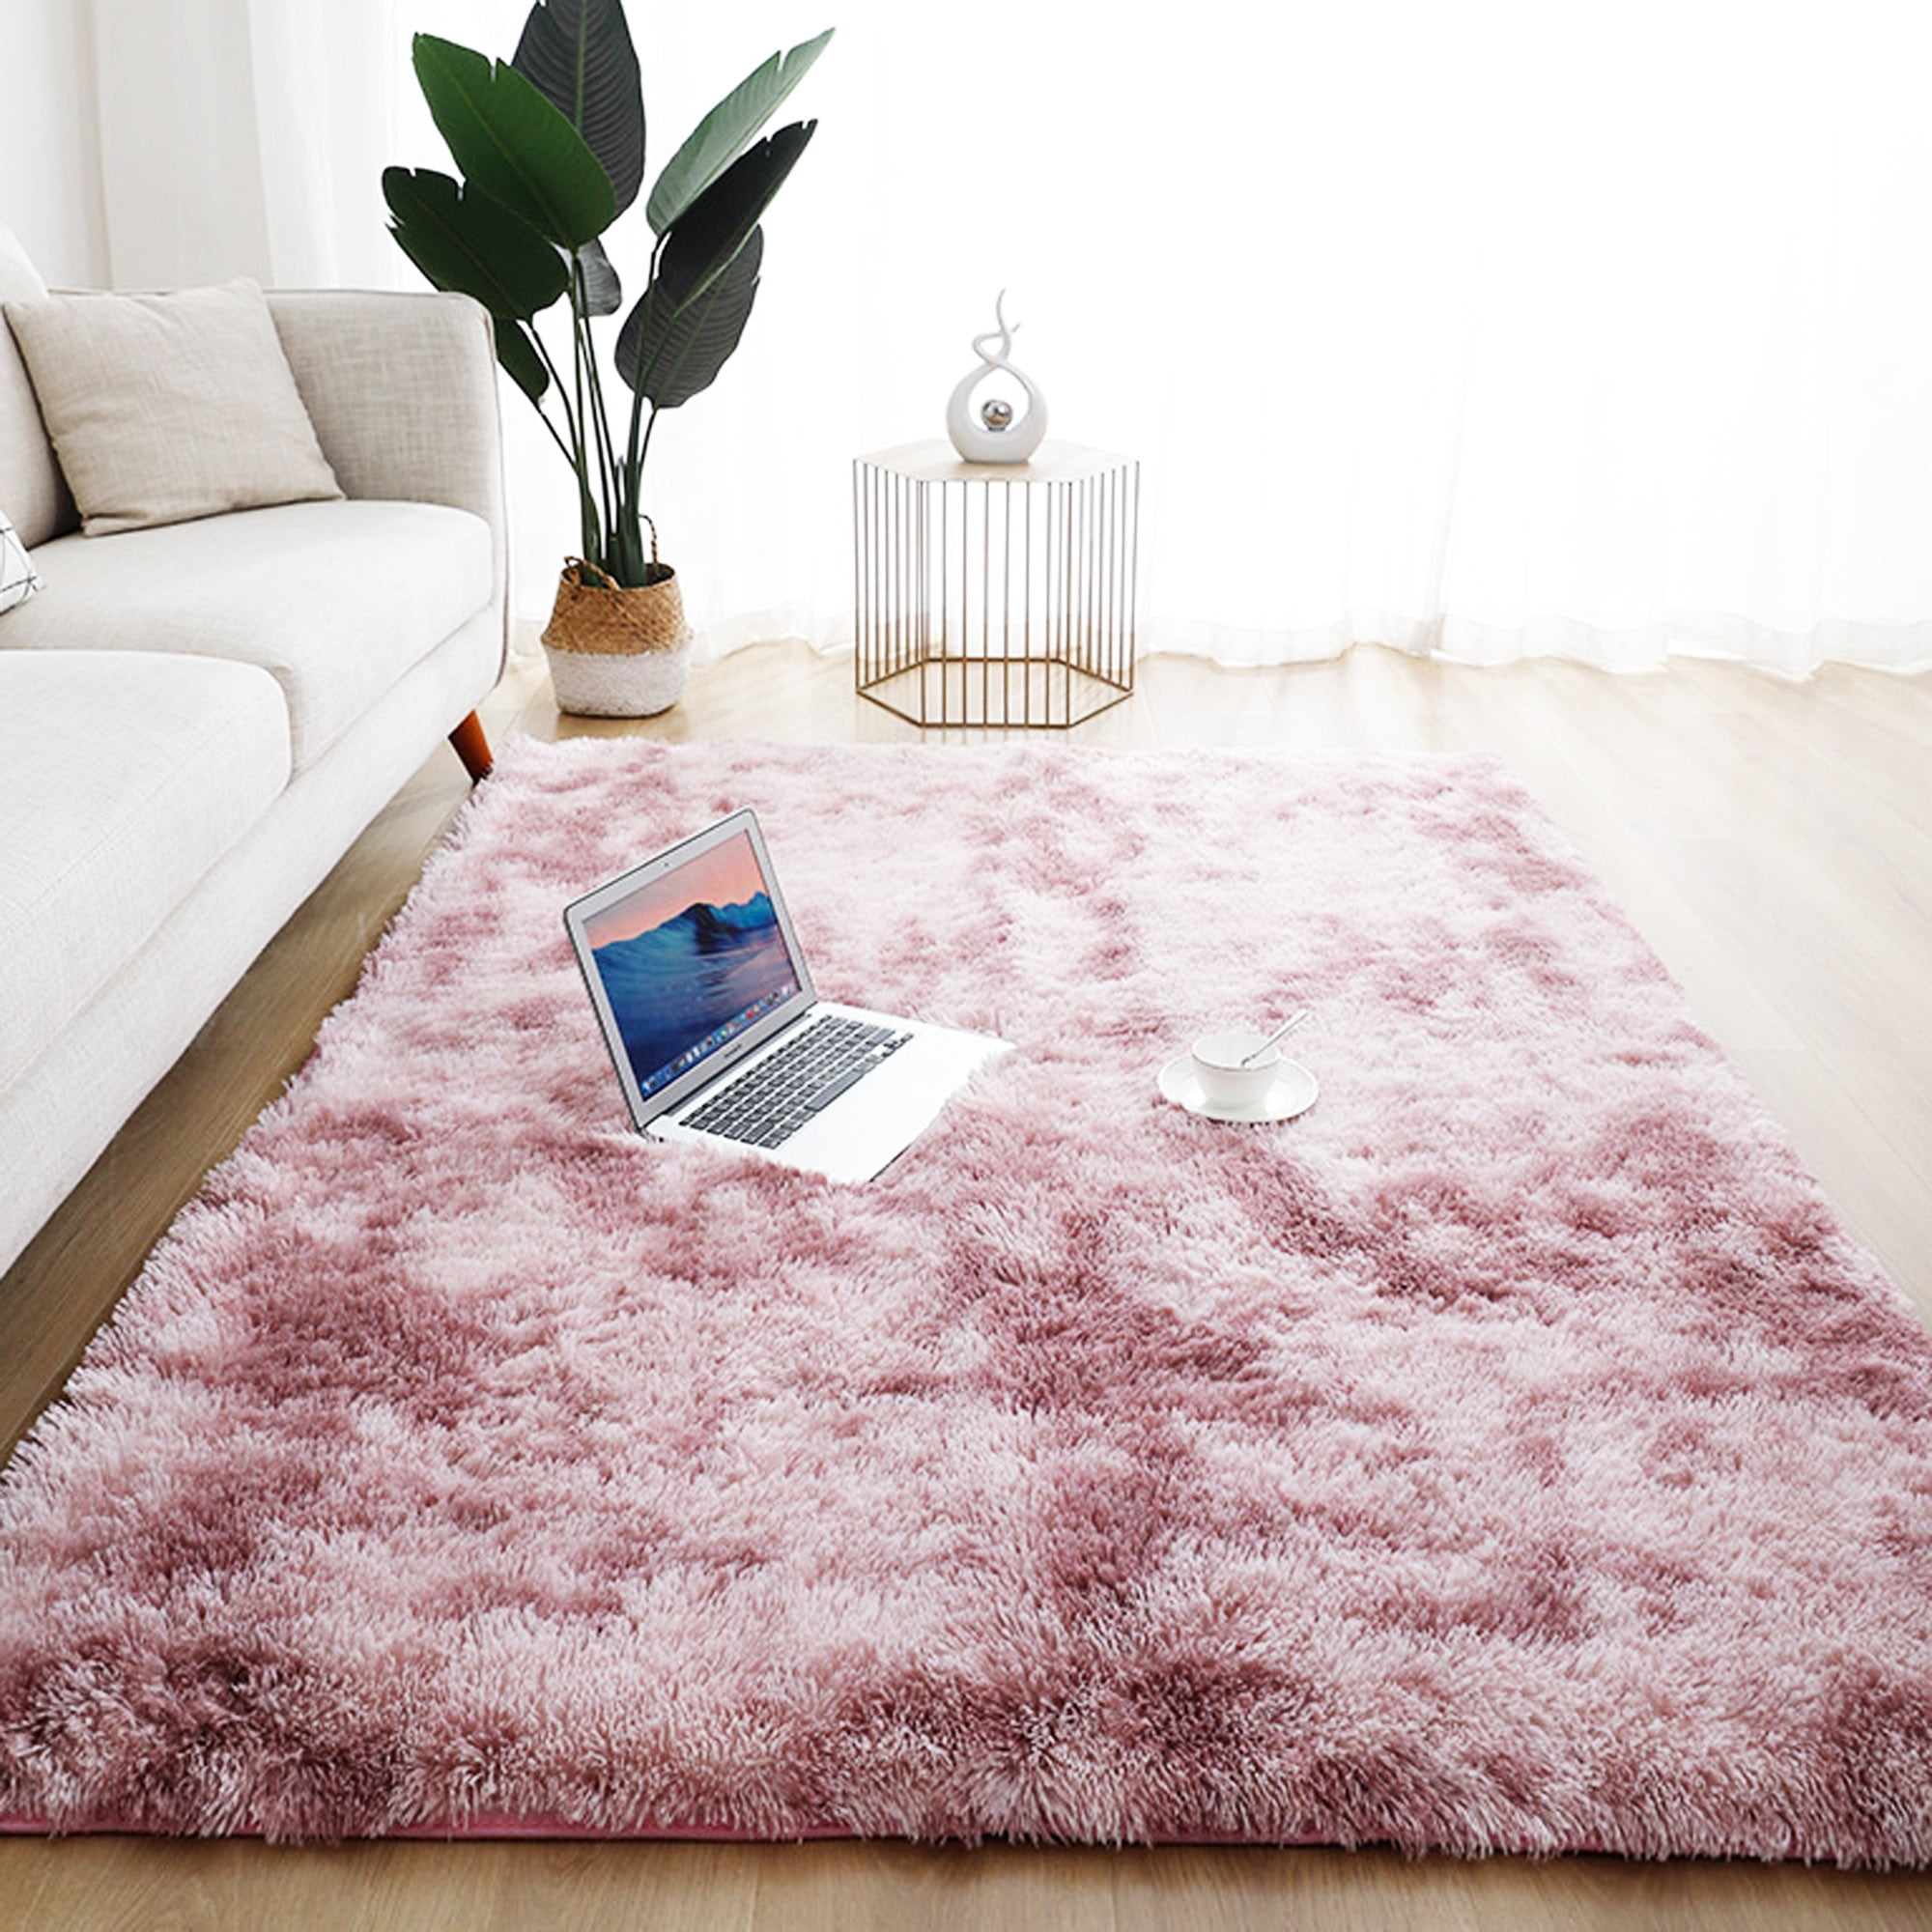 Plush Fluffy Shag Shaggy Rug Tie-Dye Thick Soft Area Rugs Floor Carpet Mat Home 